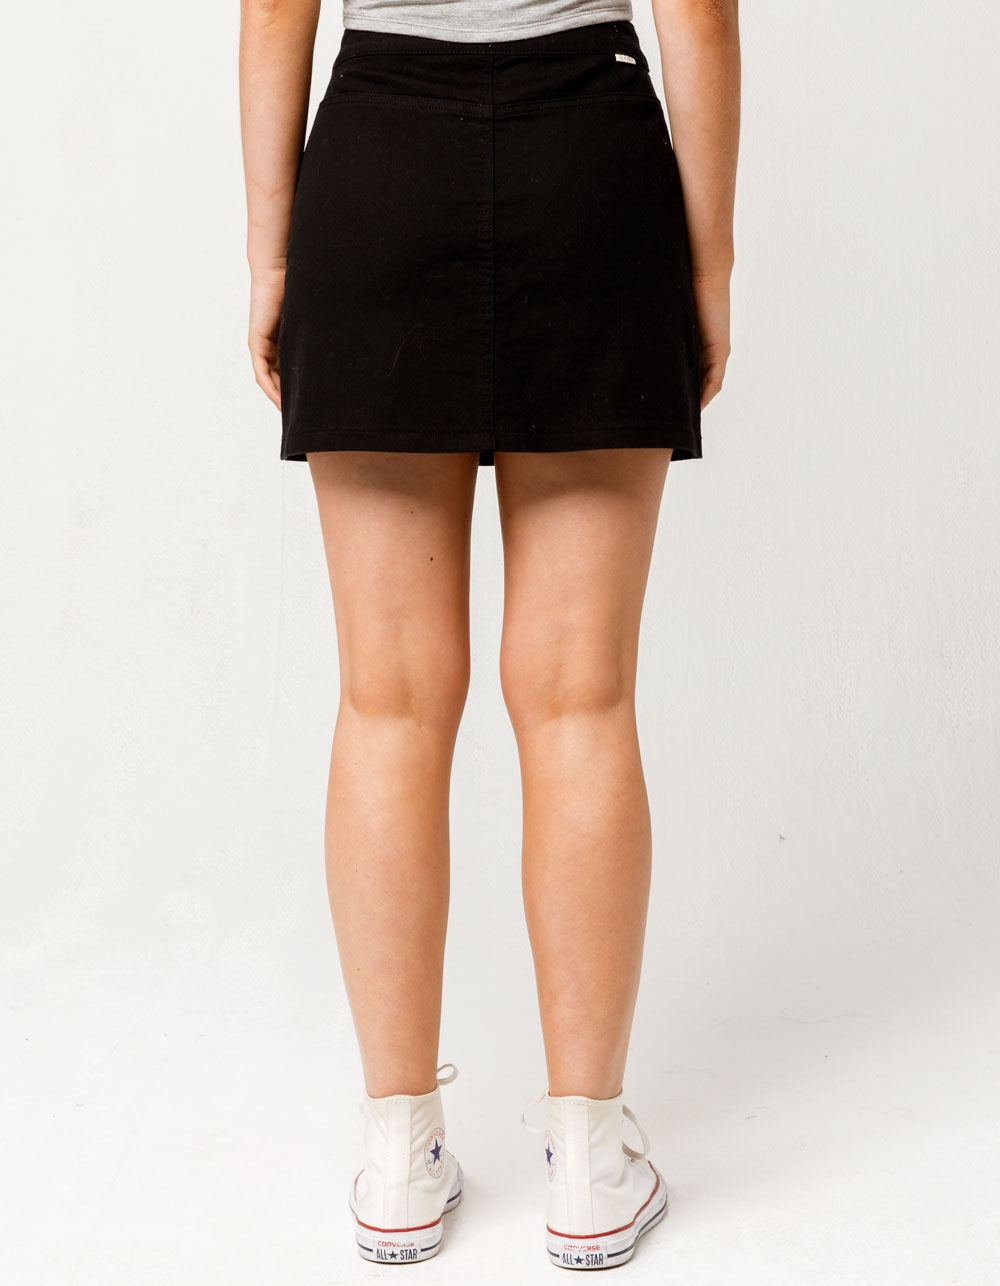 SKY AND SPARROW Button Front Black Denim Skirt - BLACK | Tillys